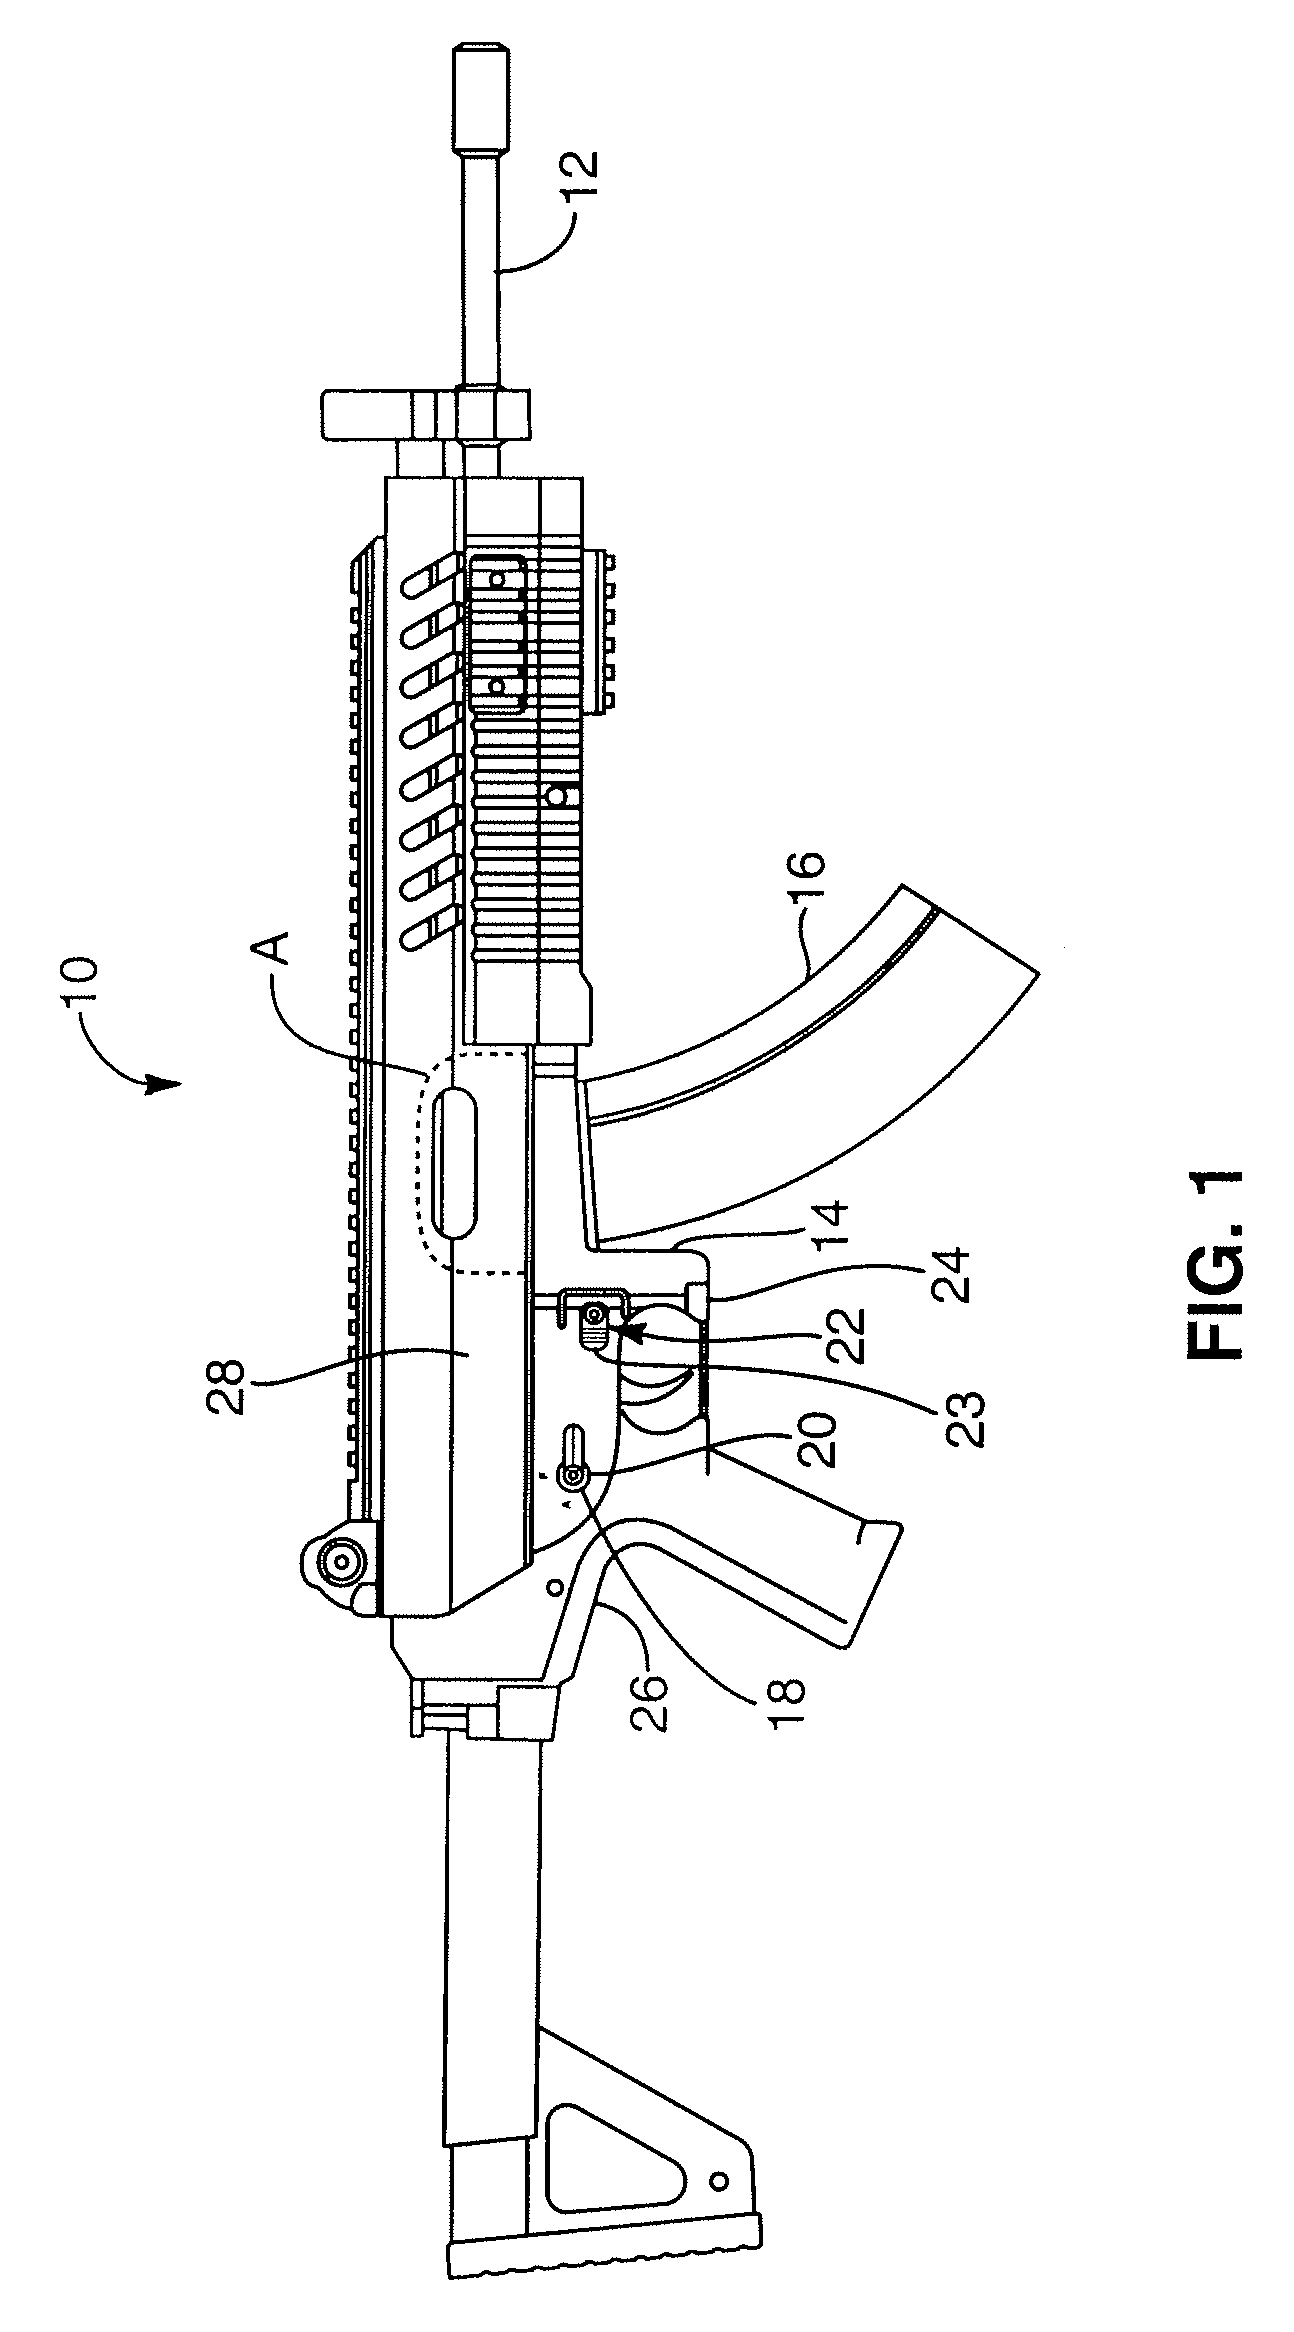 Multi-caliber ambidextrously controllable firearm